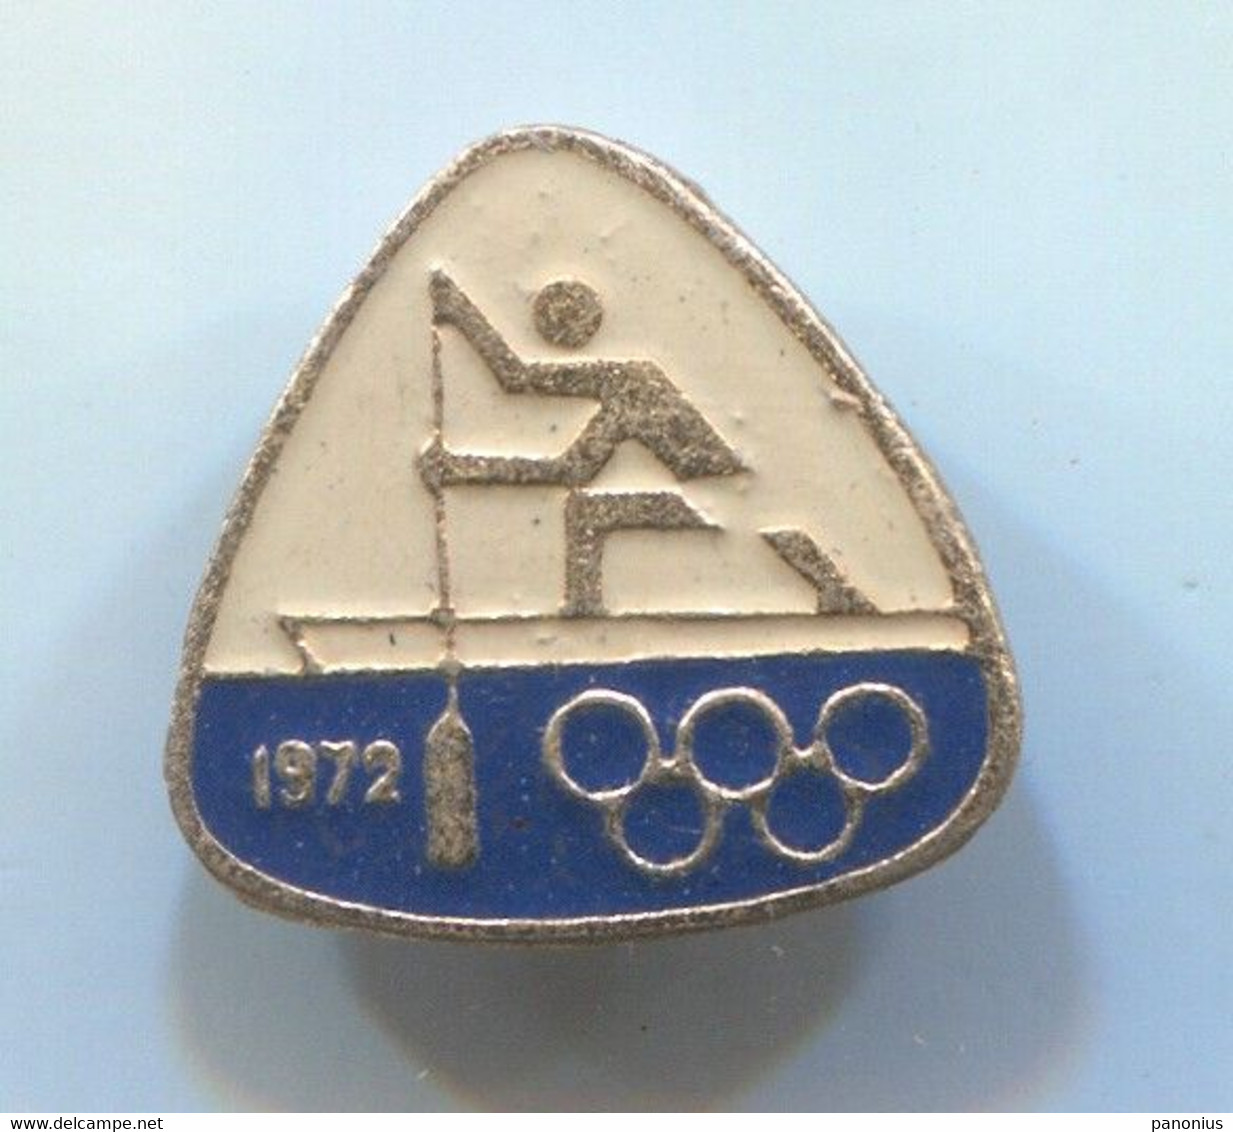 ROWING CANOE KAYAK - OLYMPIADE MUNCHEN 1972. RUSSIAN VINTAGE PIN, BADGE, ABZEICHEN - Rudersport